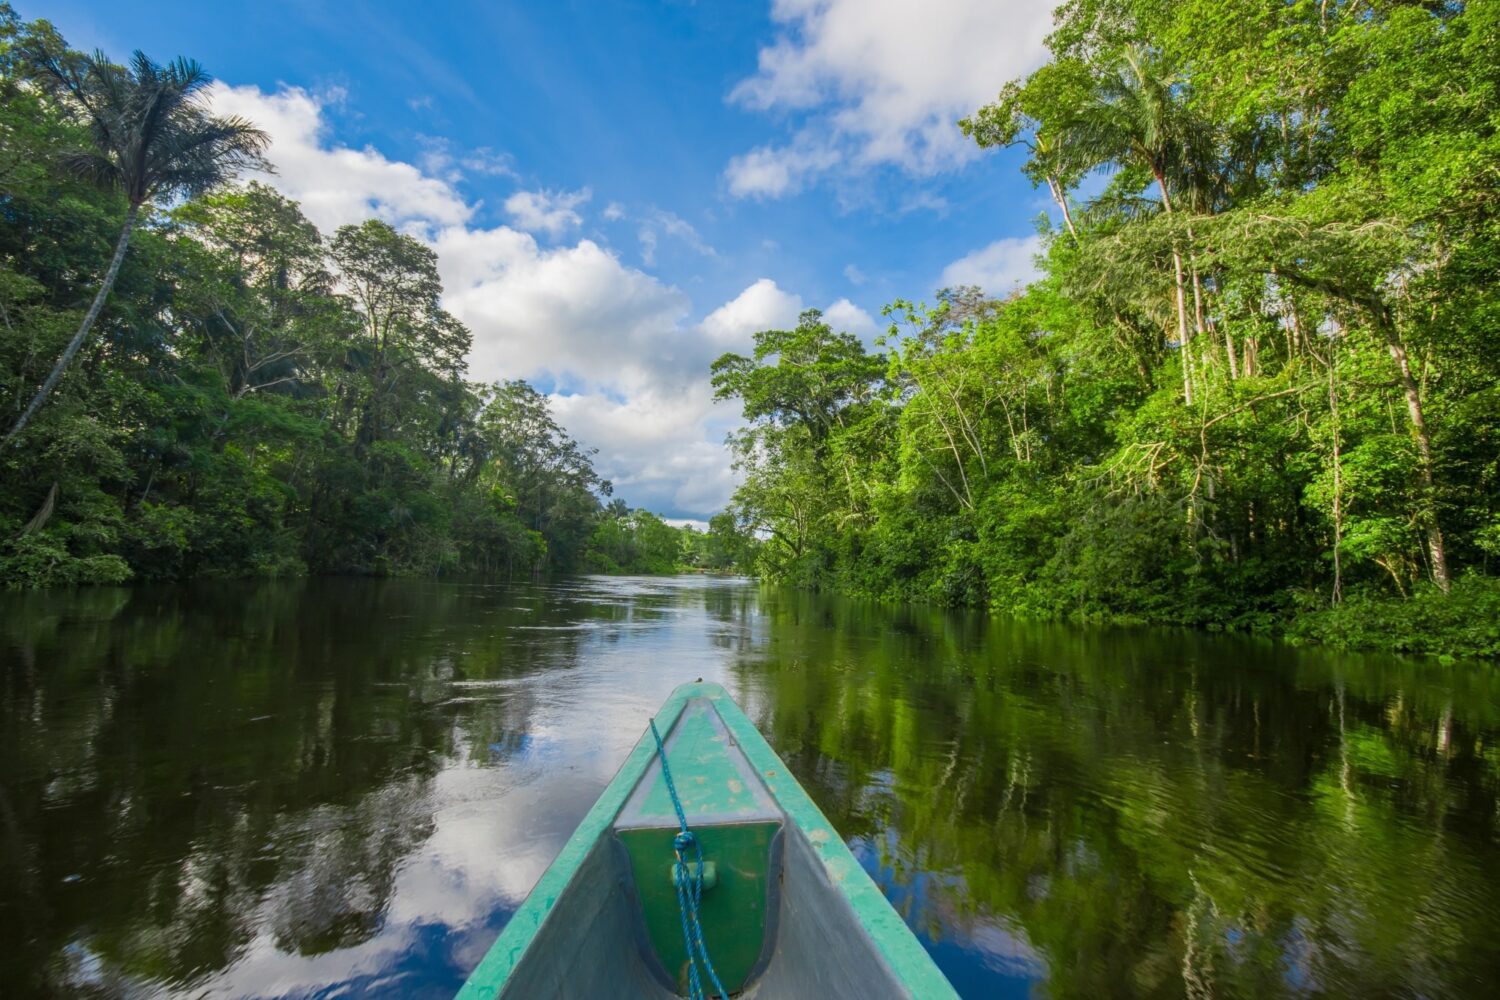 Plan turístico al Amazonas